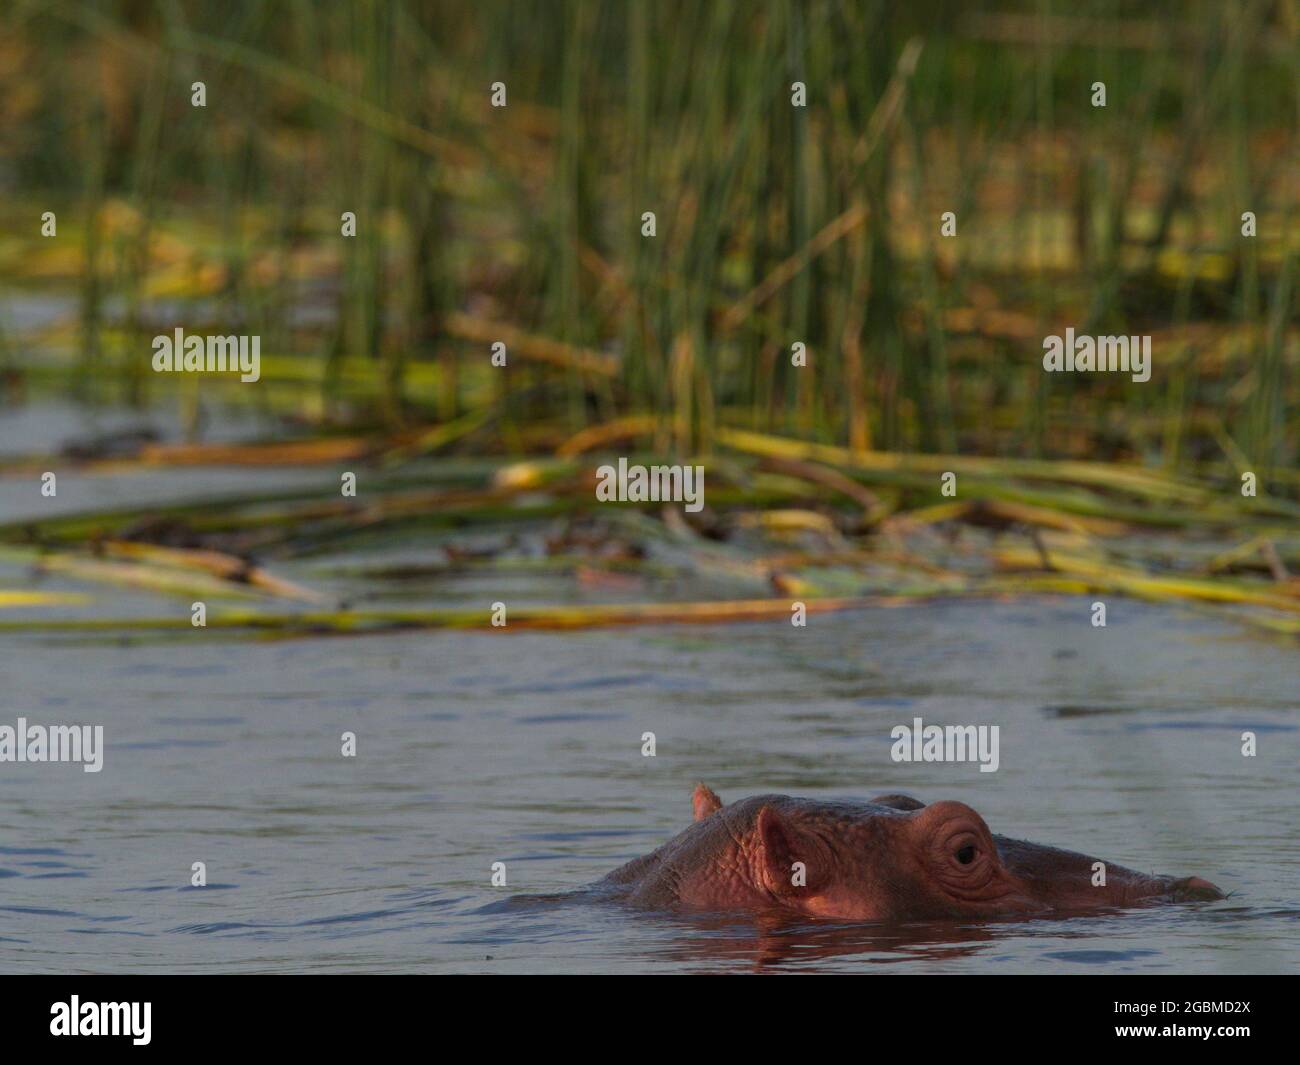 Closeup head on portrait of Hippopotamus (Hippopotamus amphibius) head floating in water focus on eye Lake Awassa, Ethiopia. Stock Photo